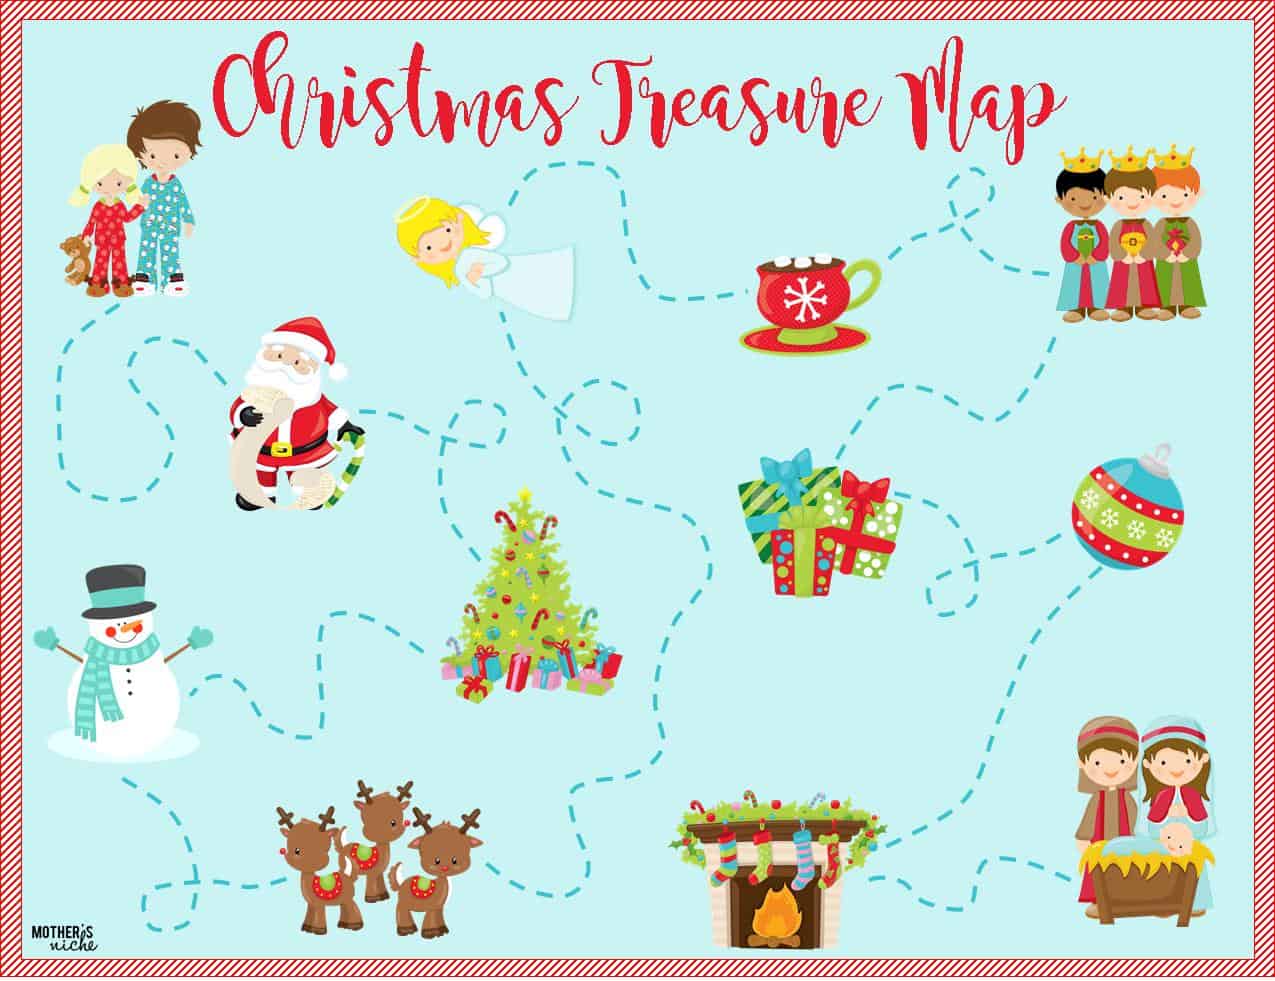 Christmas Treasure Map Free Printable Map And Clues